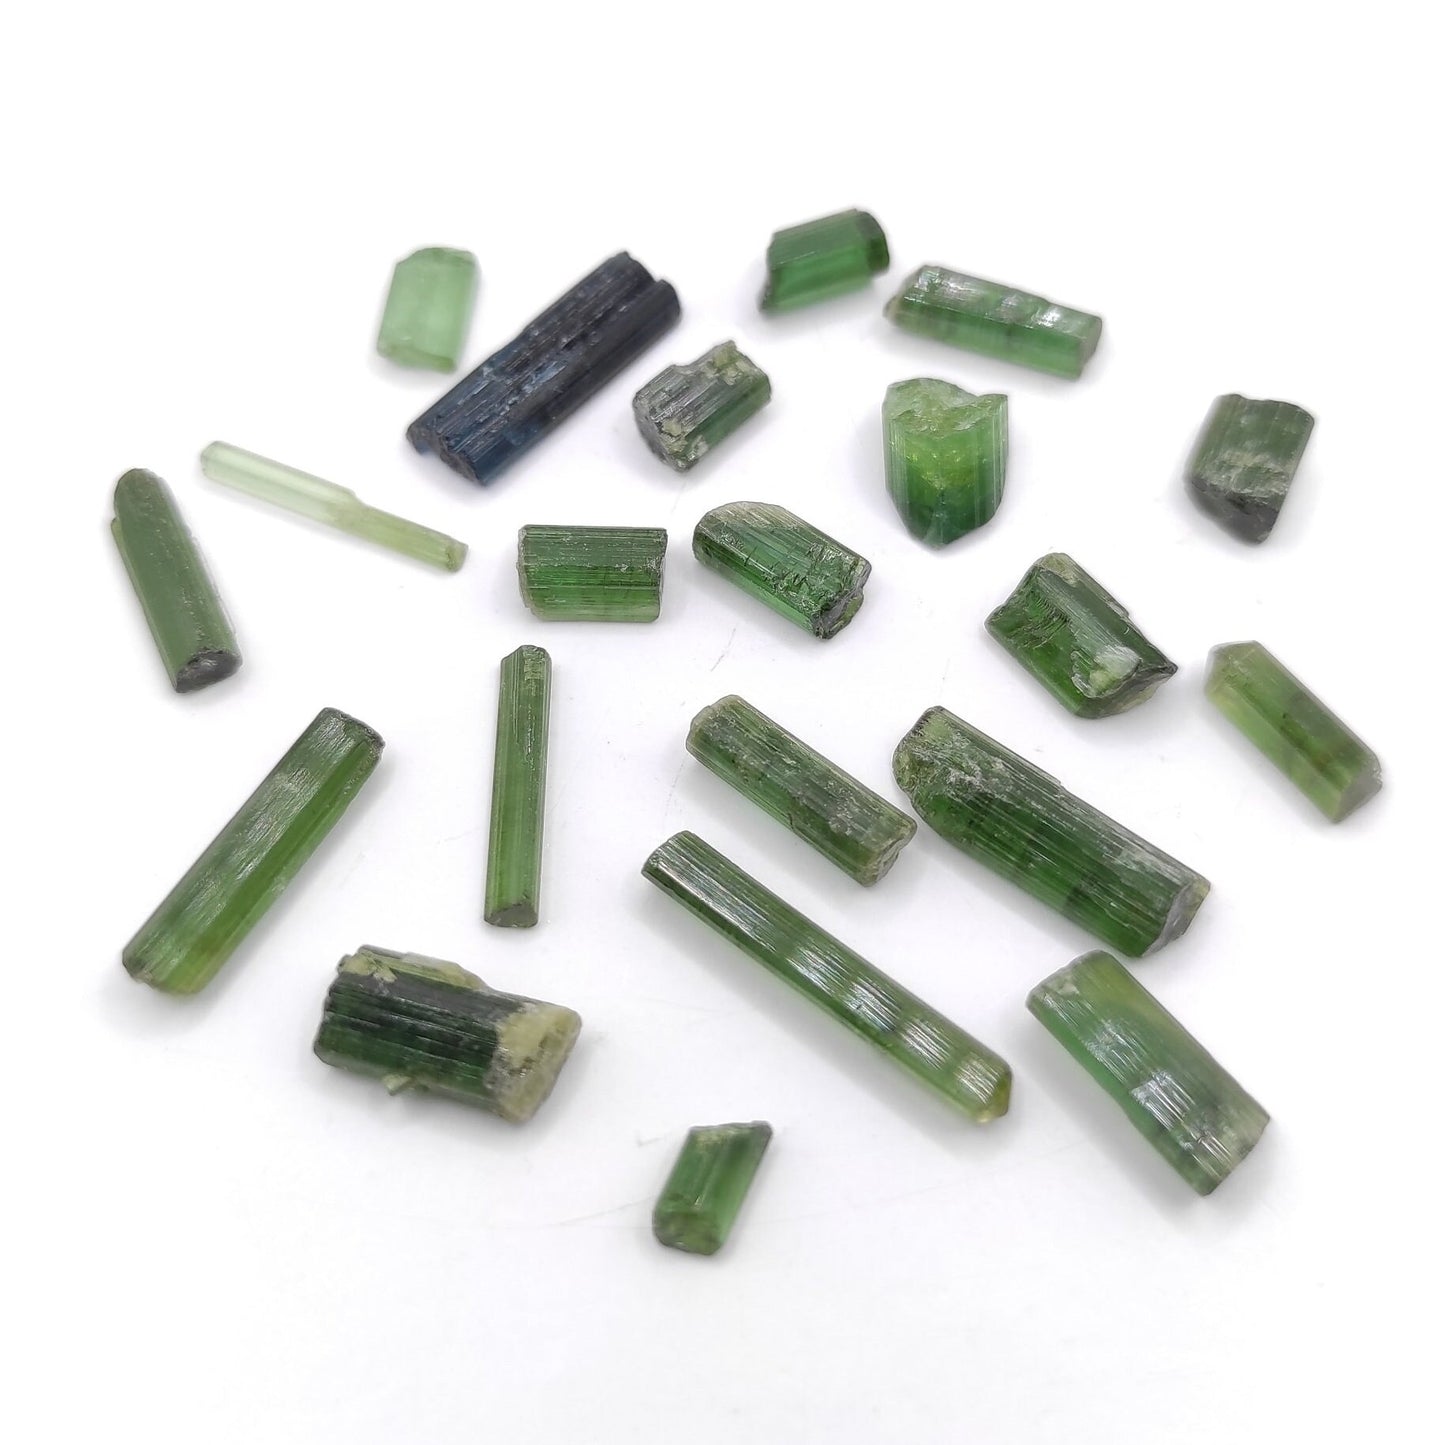 37ct Green Tourmaline Lot - Tourmaline Sticks - Raw Green Tourmaline Crystals - Loose Gemstones - Rough Tourmalines Gemstones - Afghanistan